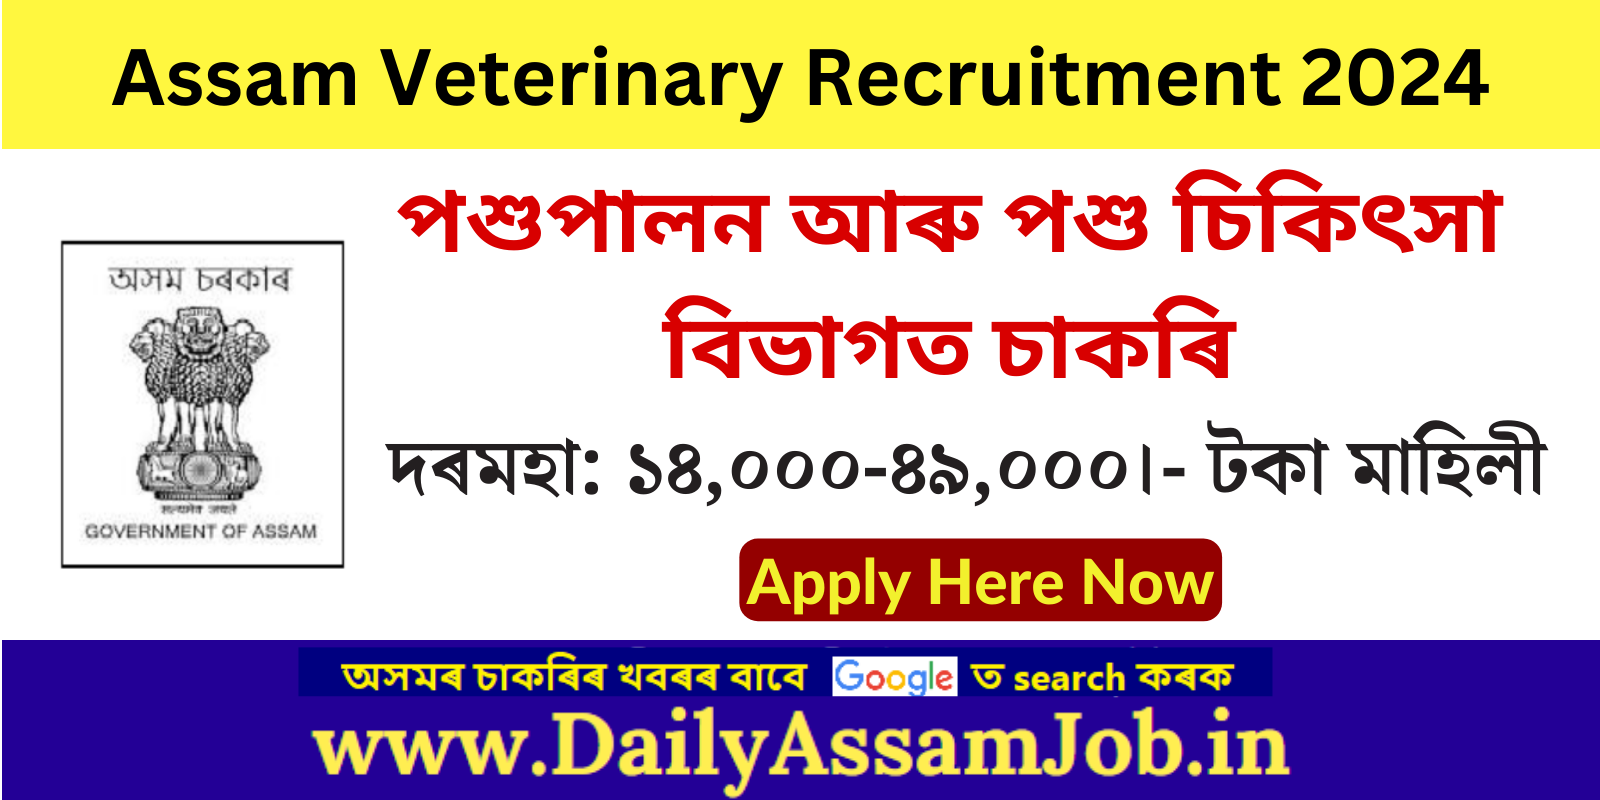 Assam Veterinary Recruitment 2024